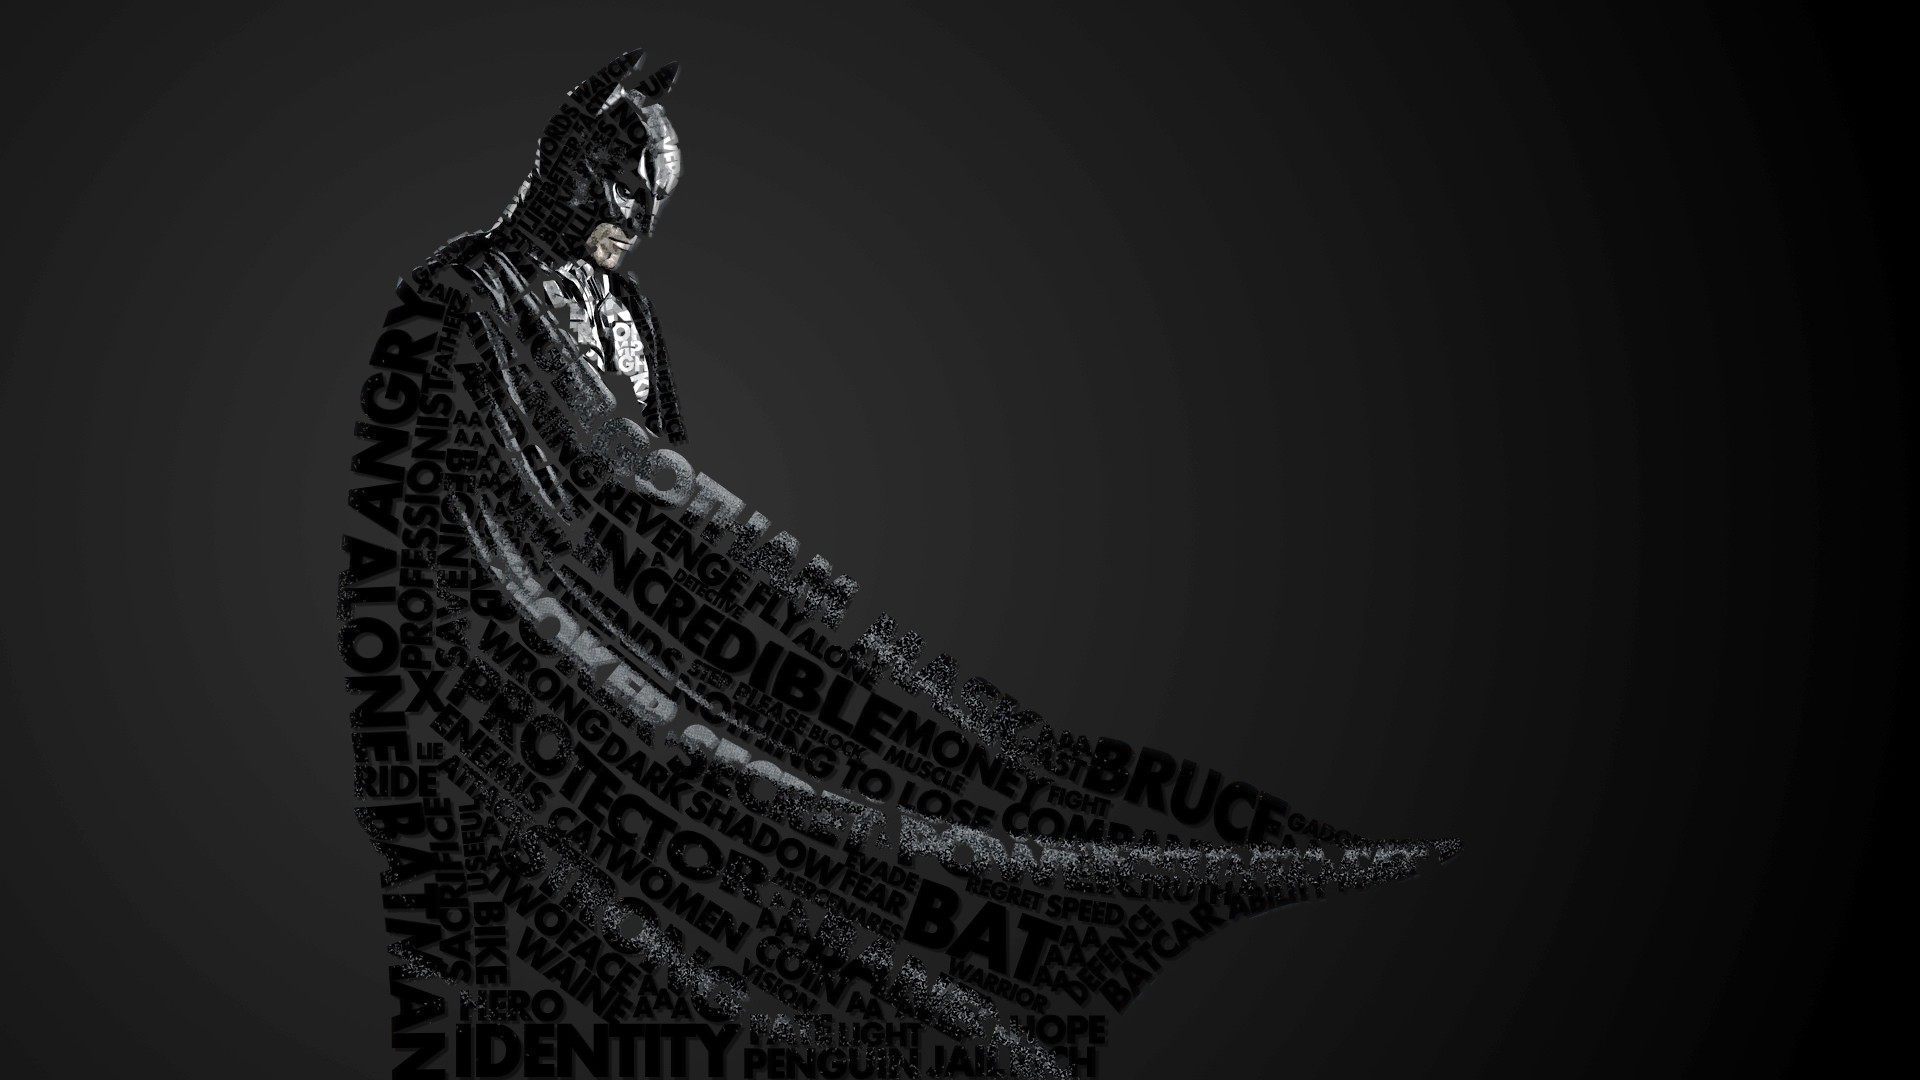 1920x1080 Batman Dark Knight Rises wallpapers and stock photos